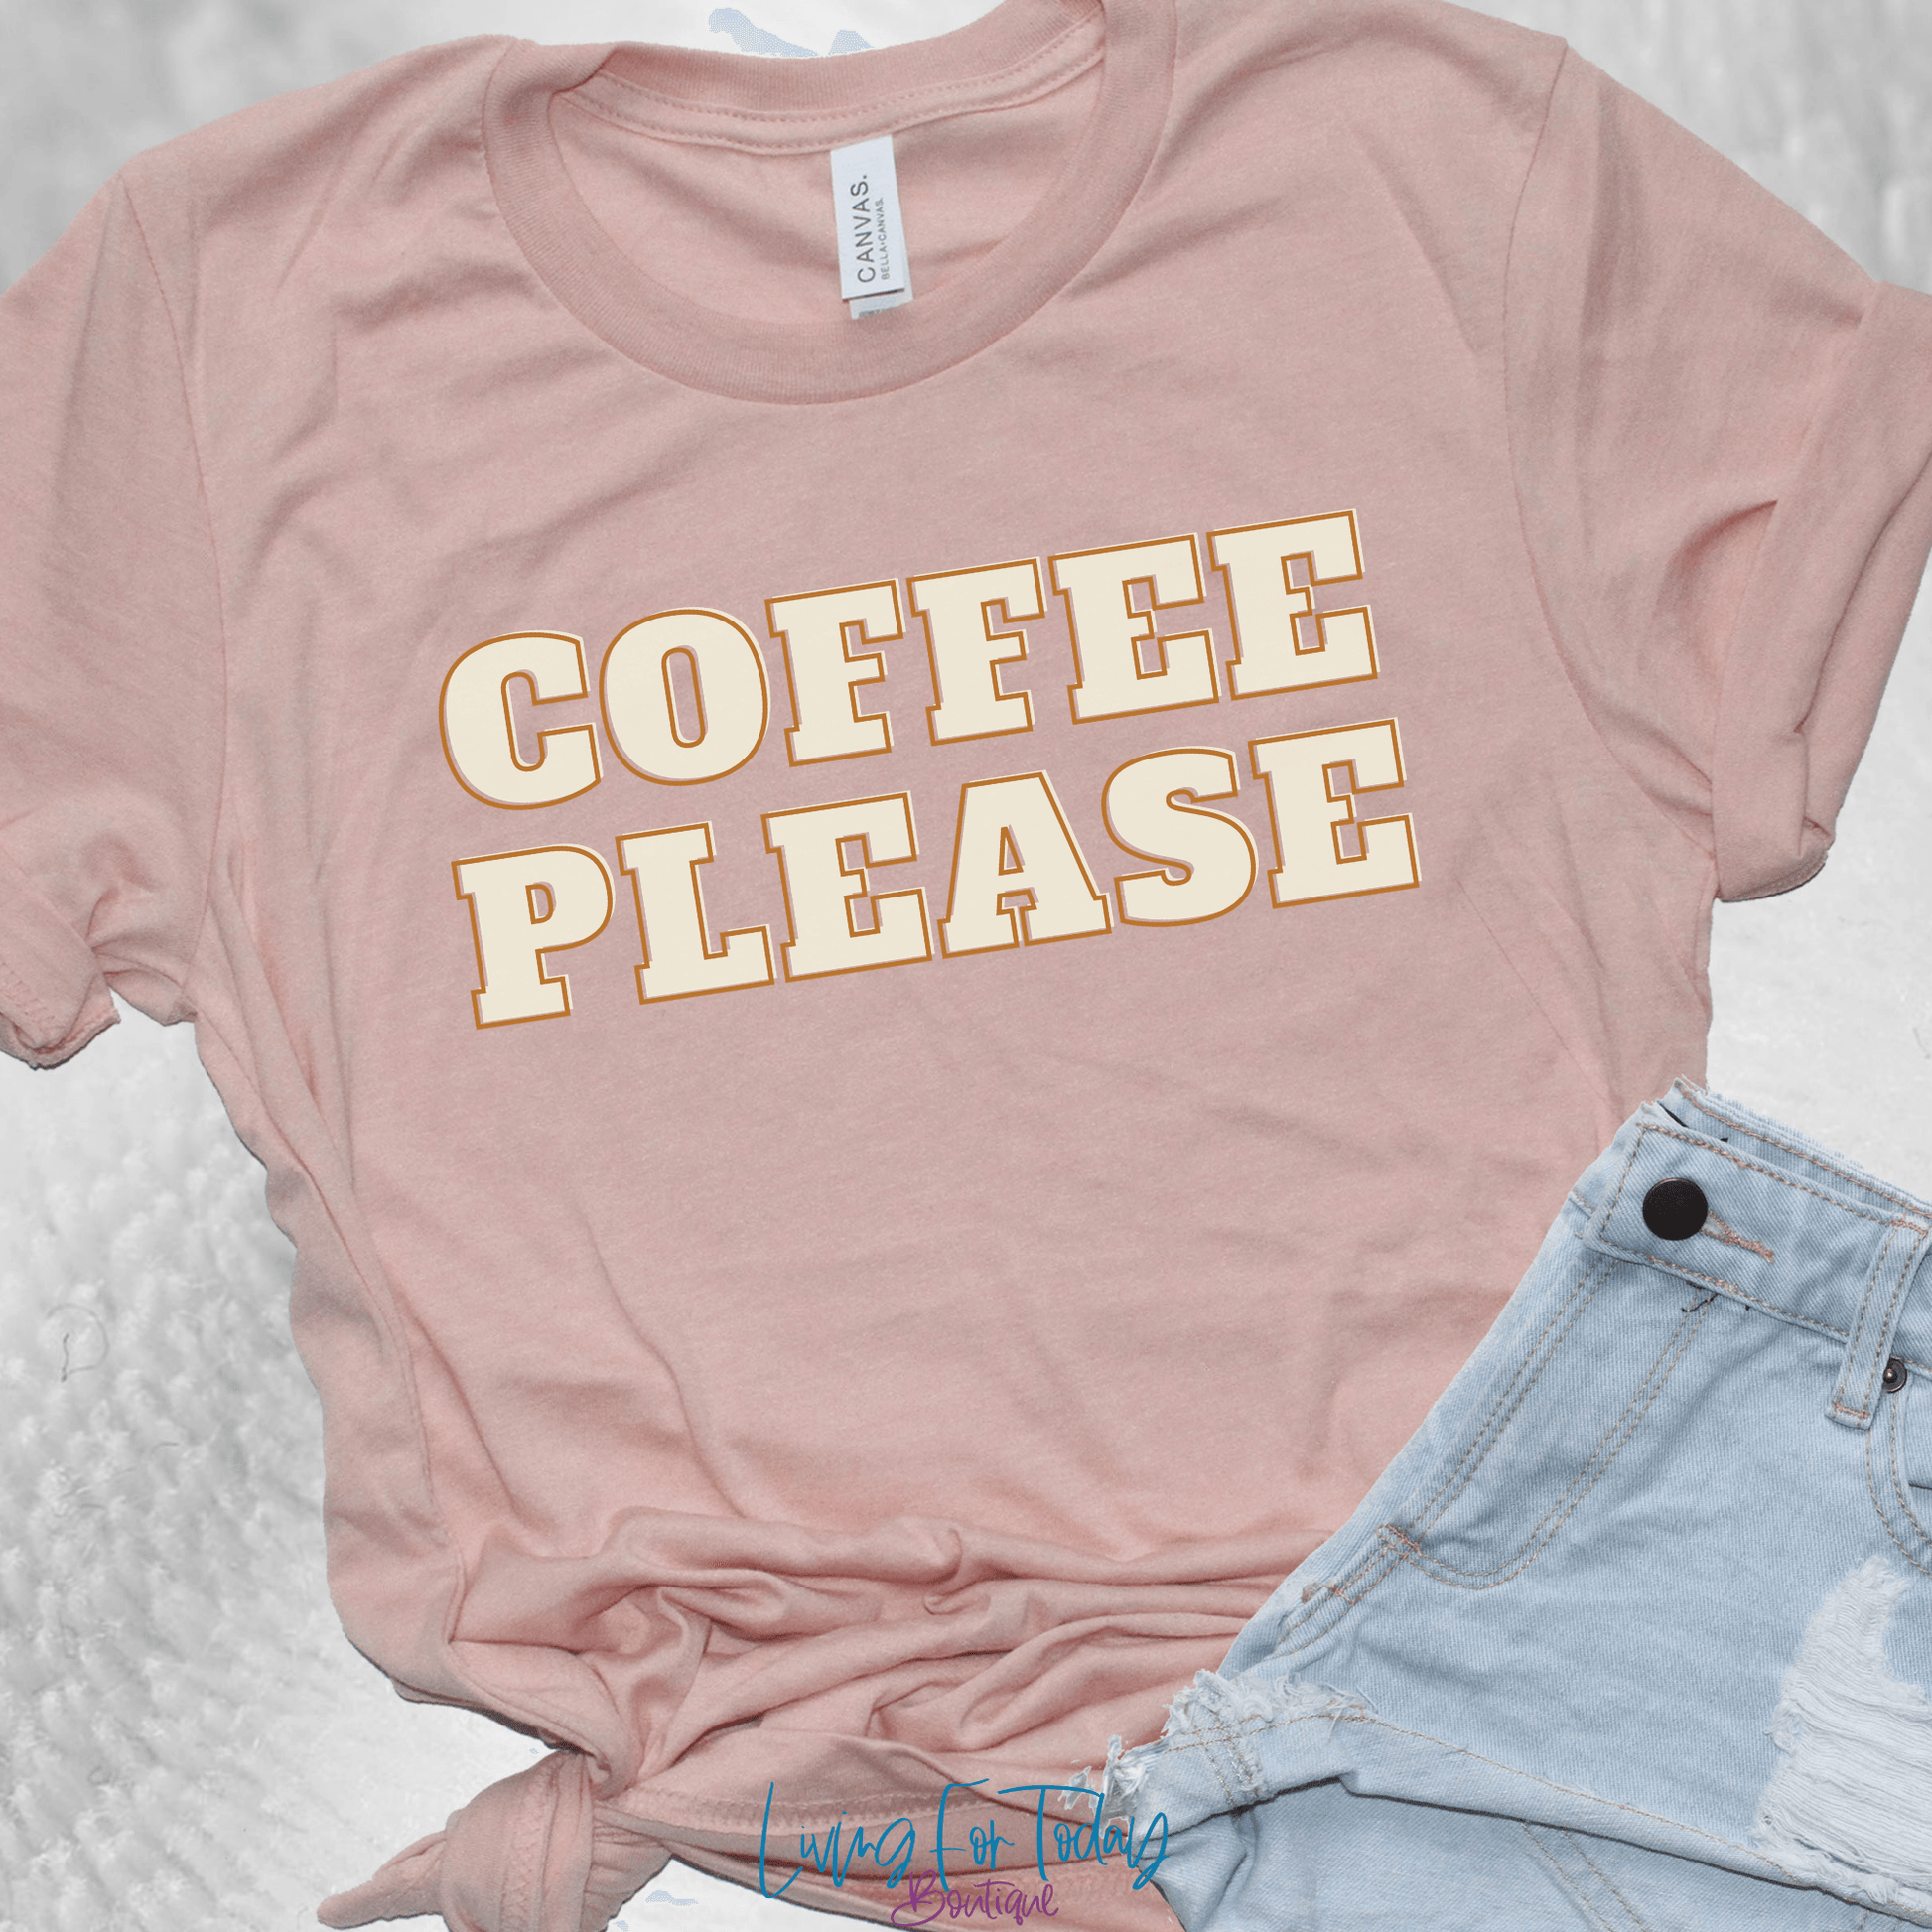 Coffee Please Shirt